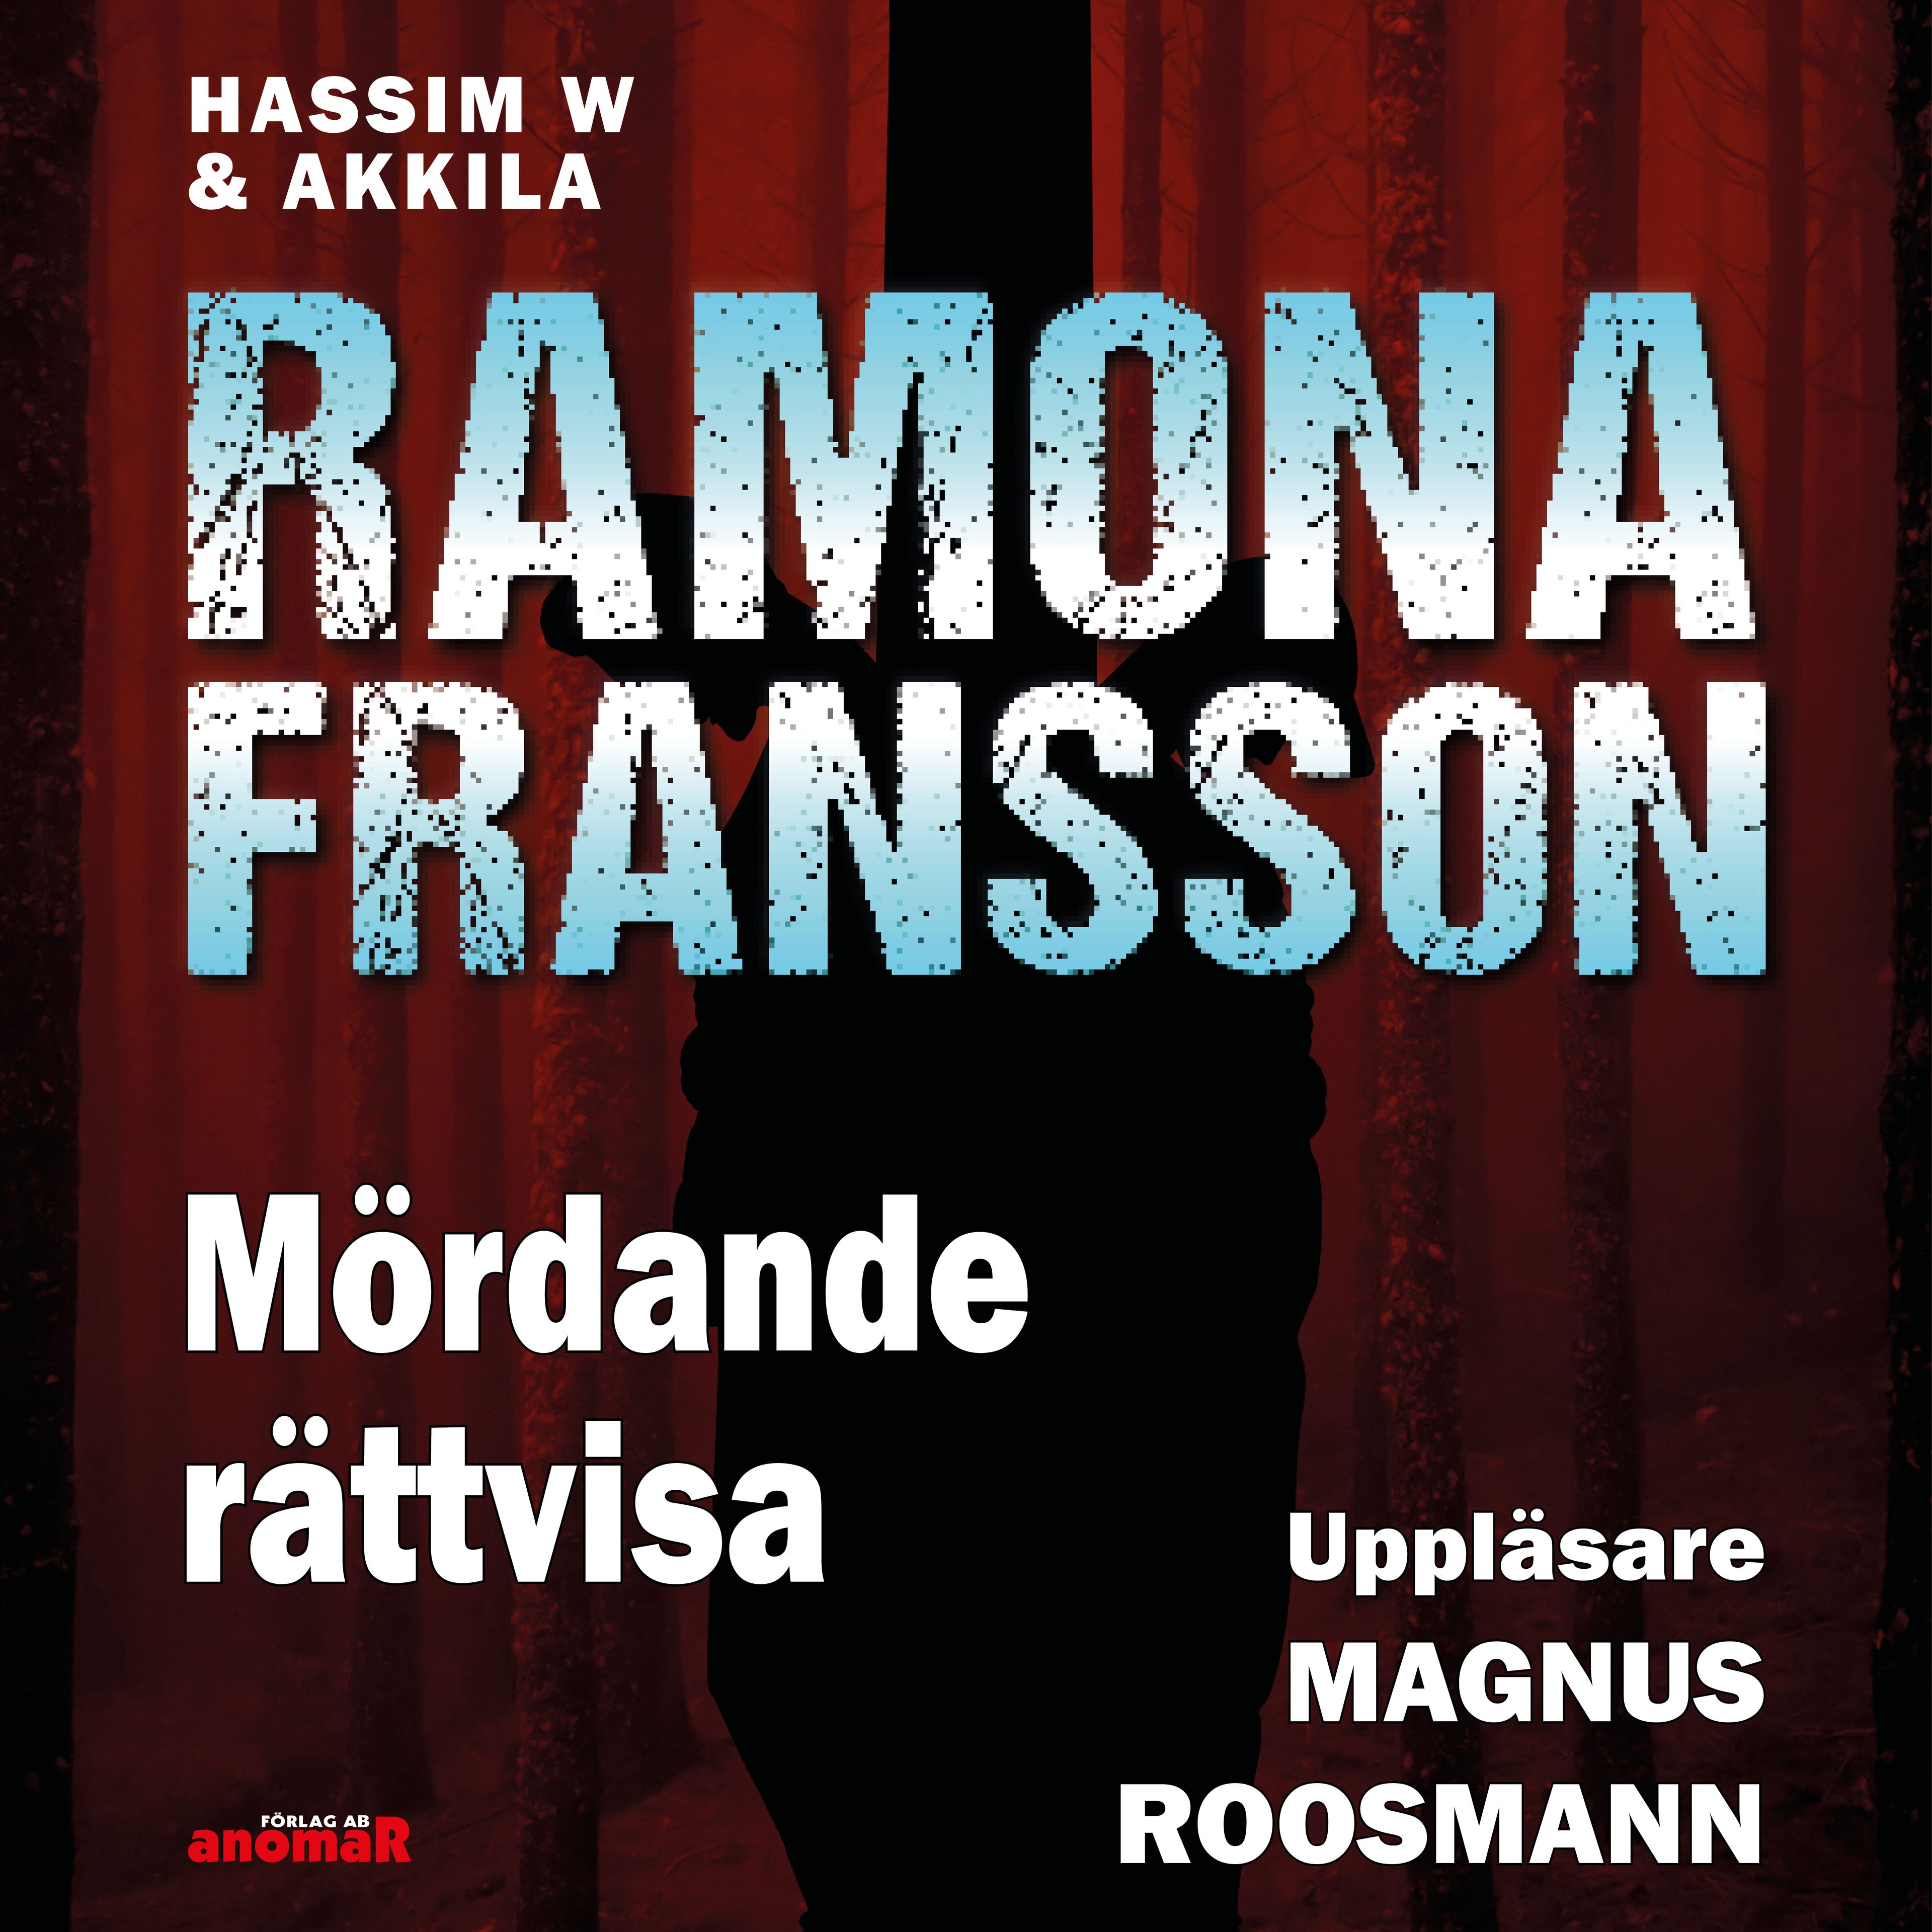 HW & Akkila, Mördande rättvisa, audiobook by Ramona Fransson